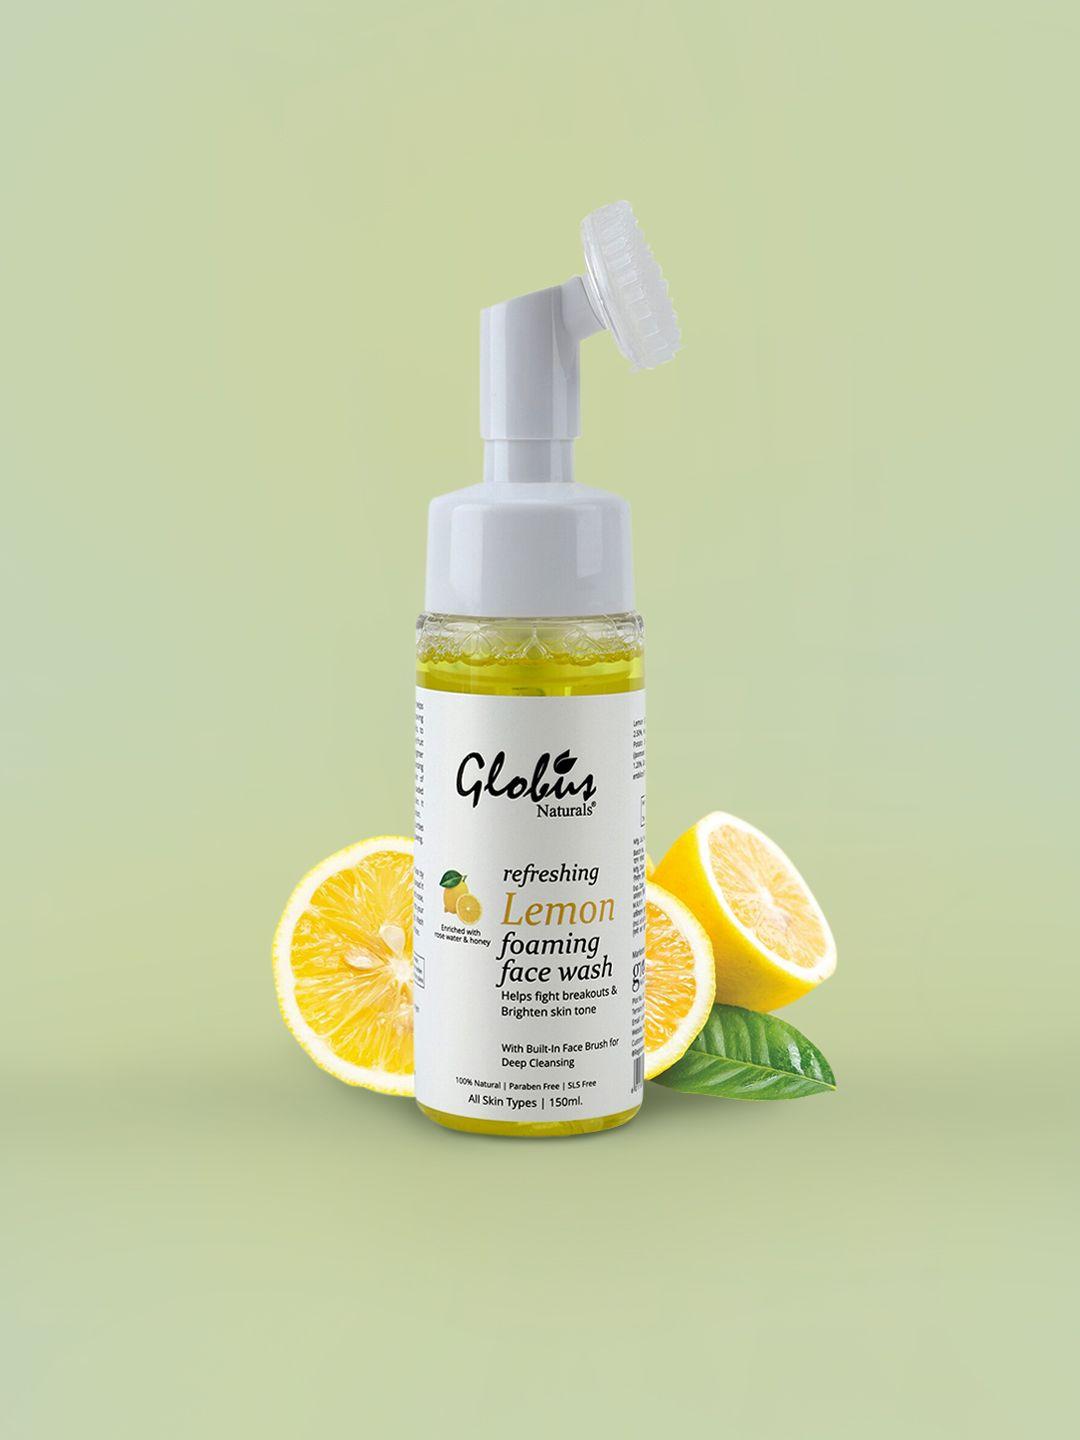 globus naturals refreshing lemon foaming face wash with silicon face massage brush 150 ml